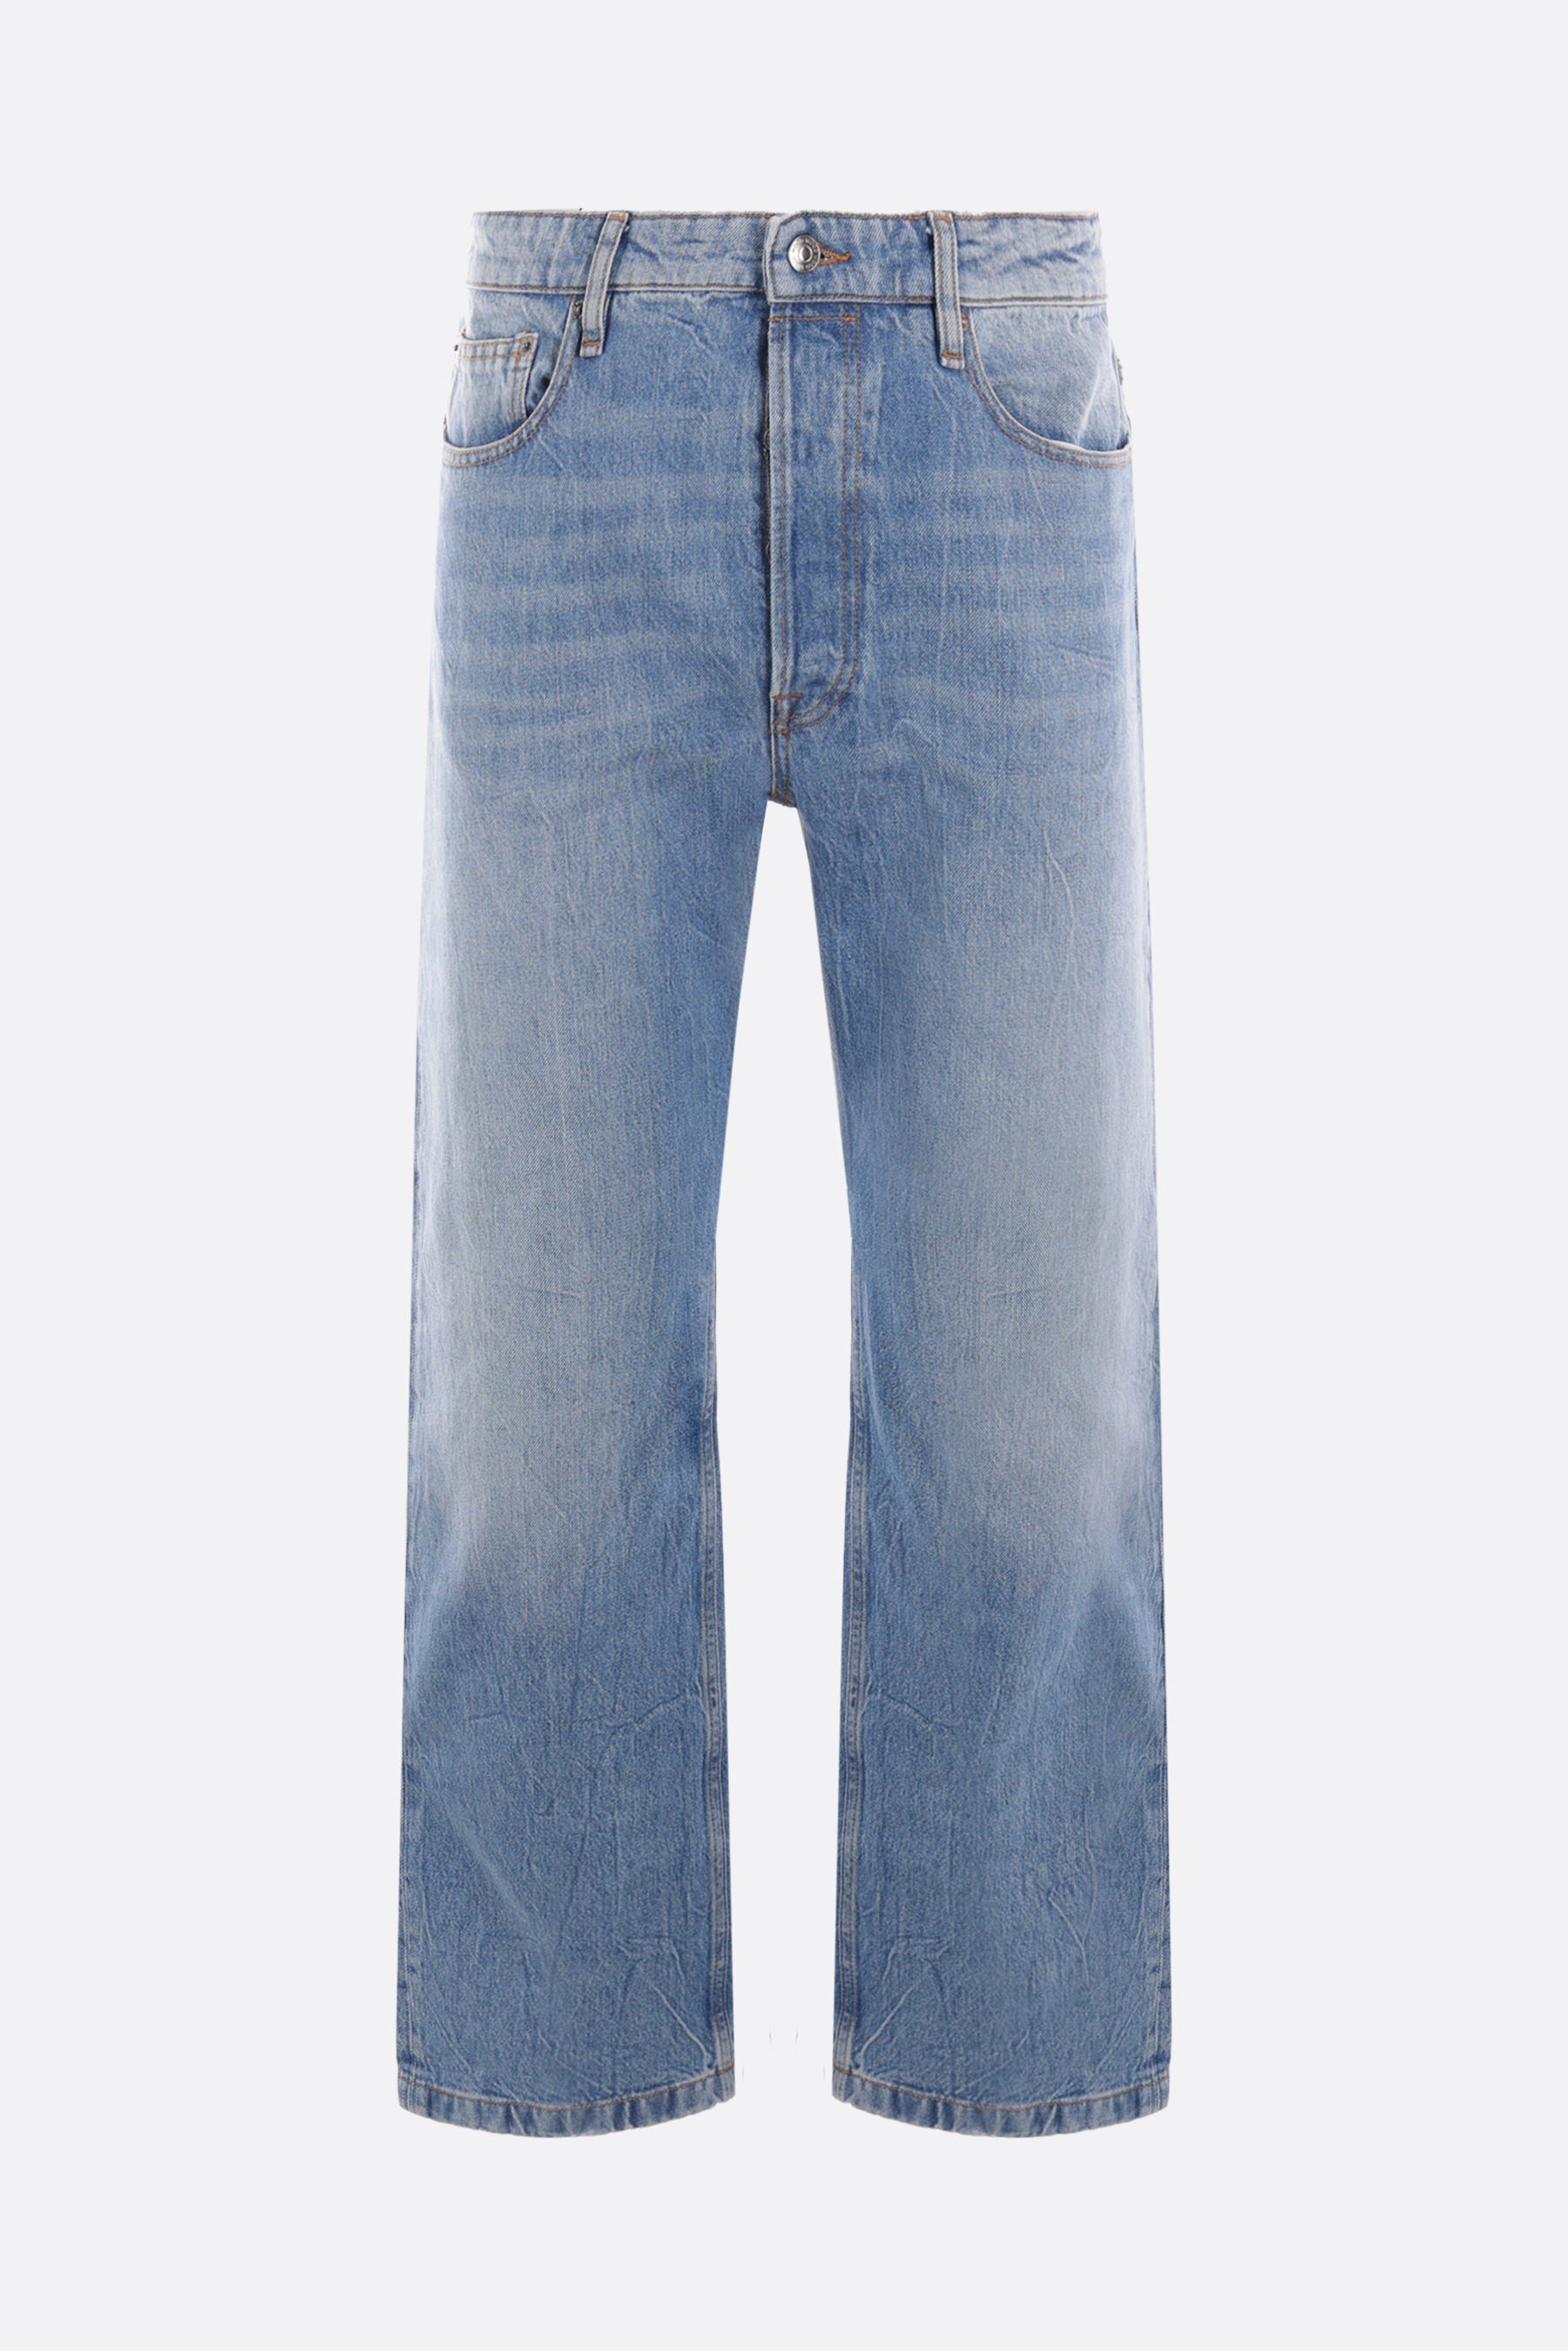 Paulo loose-fit organic denim jeans